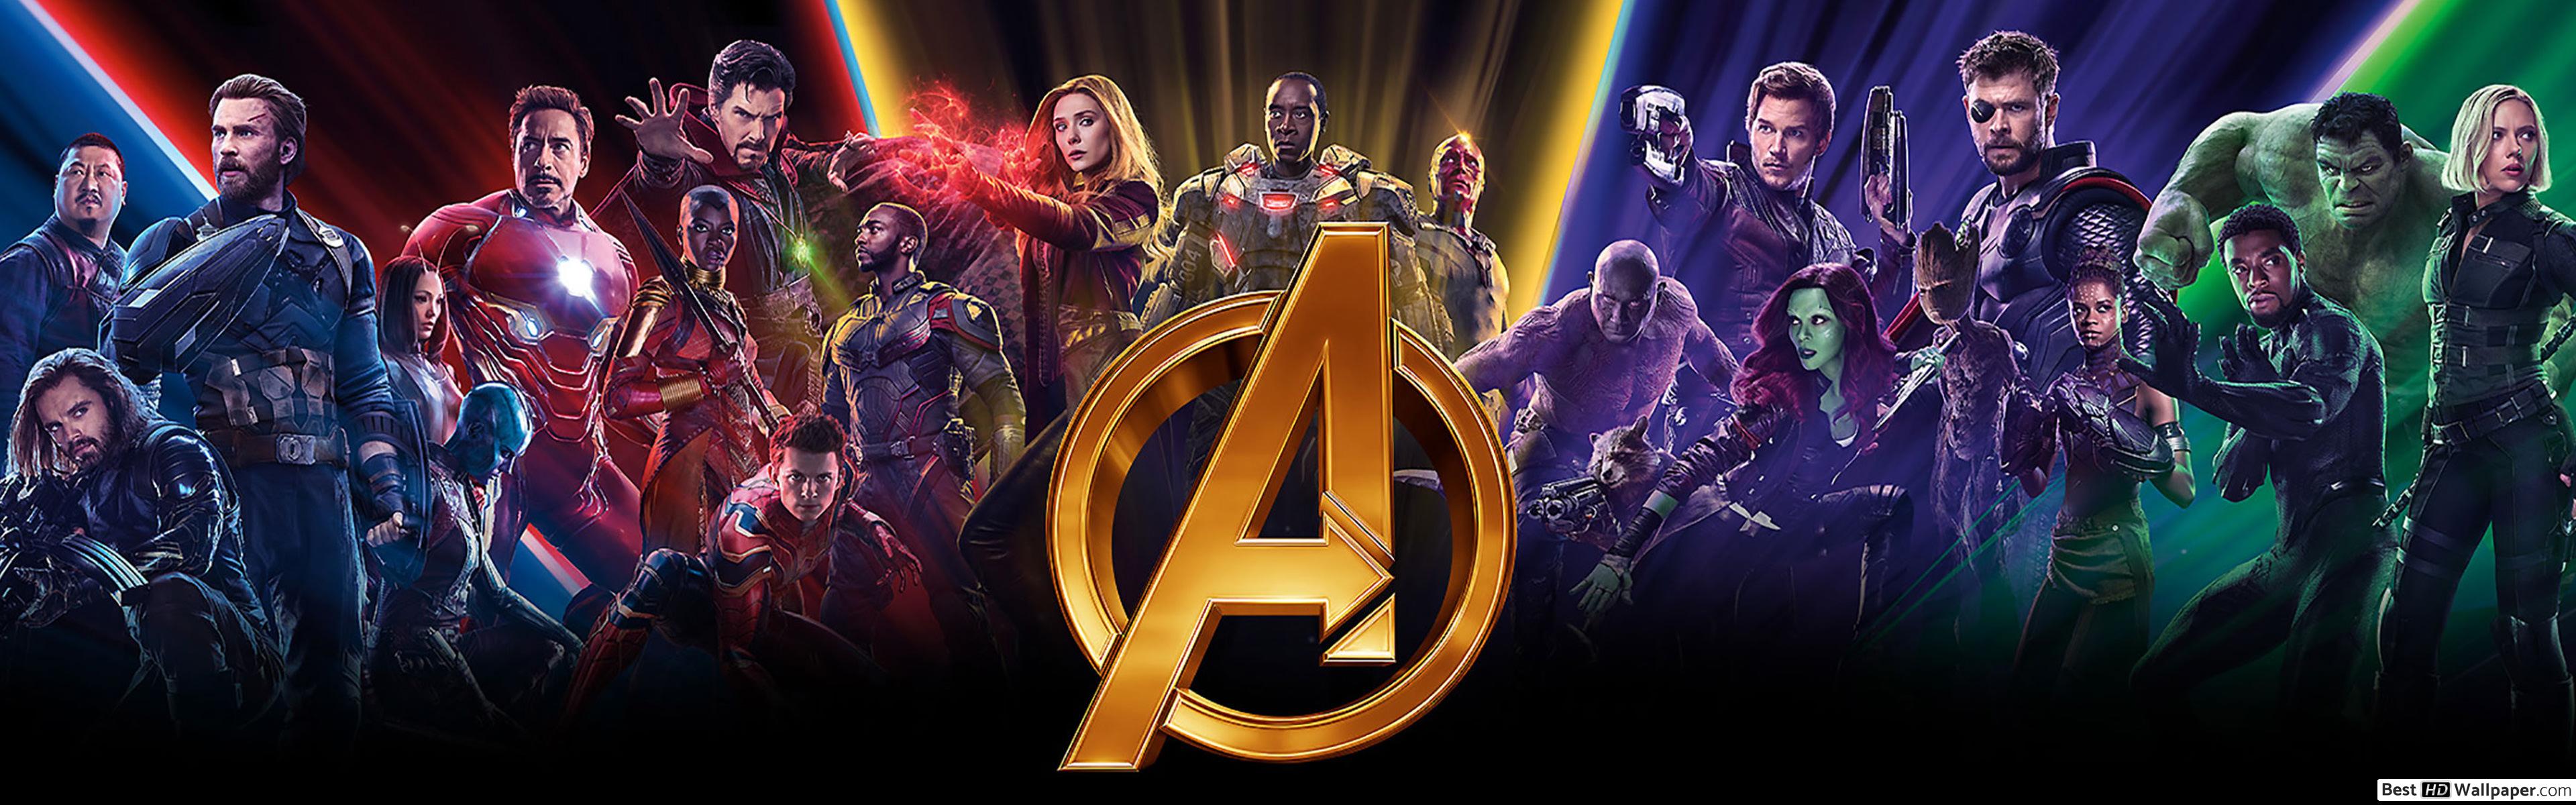 Avengers Endgame Dual Screen Wallpapers